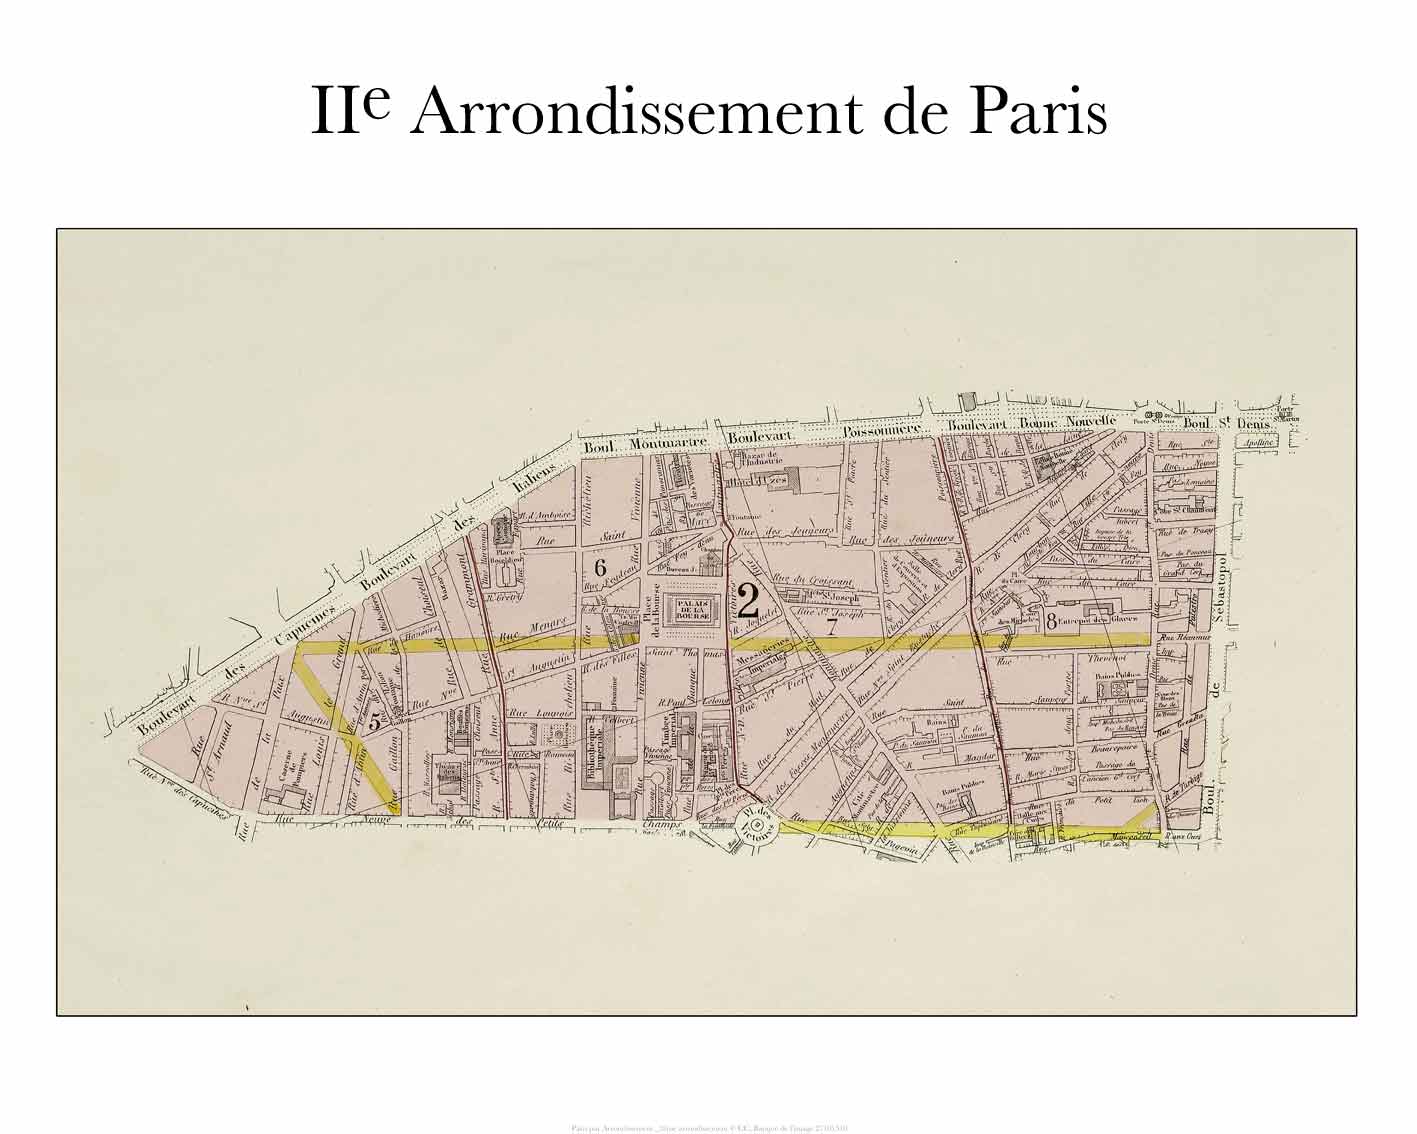 Paris - II arrondissement